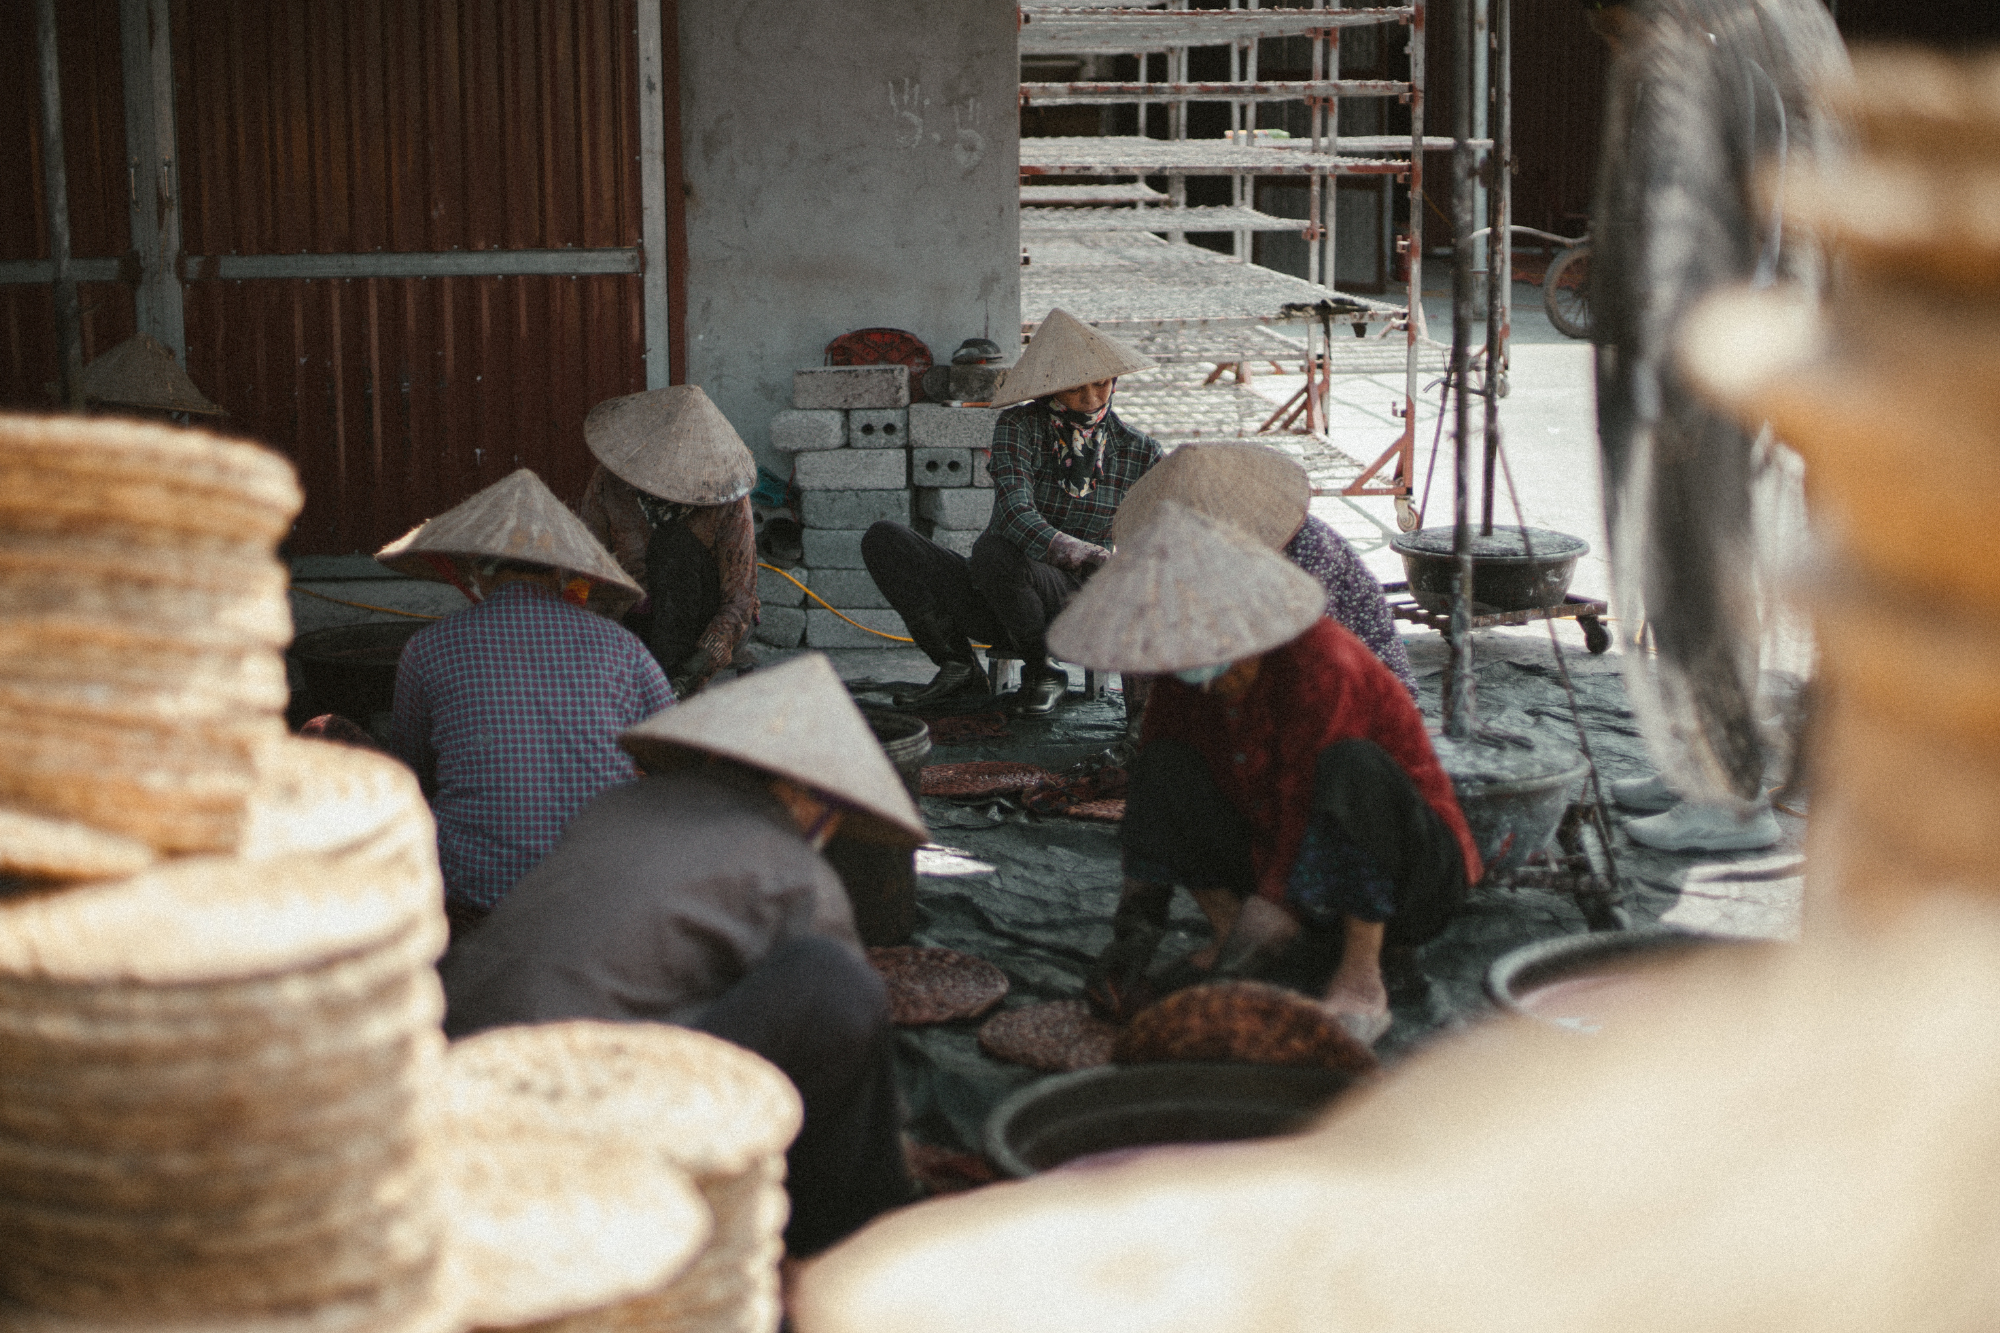 handcrafted-in-vietnam-baskets